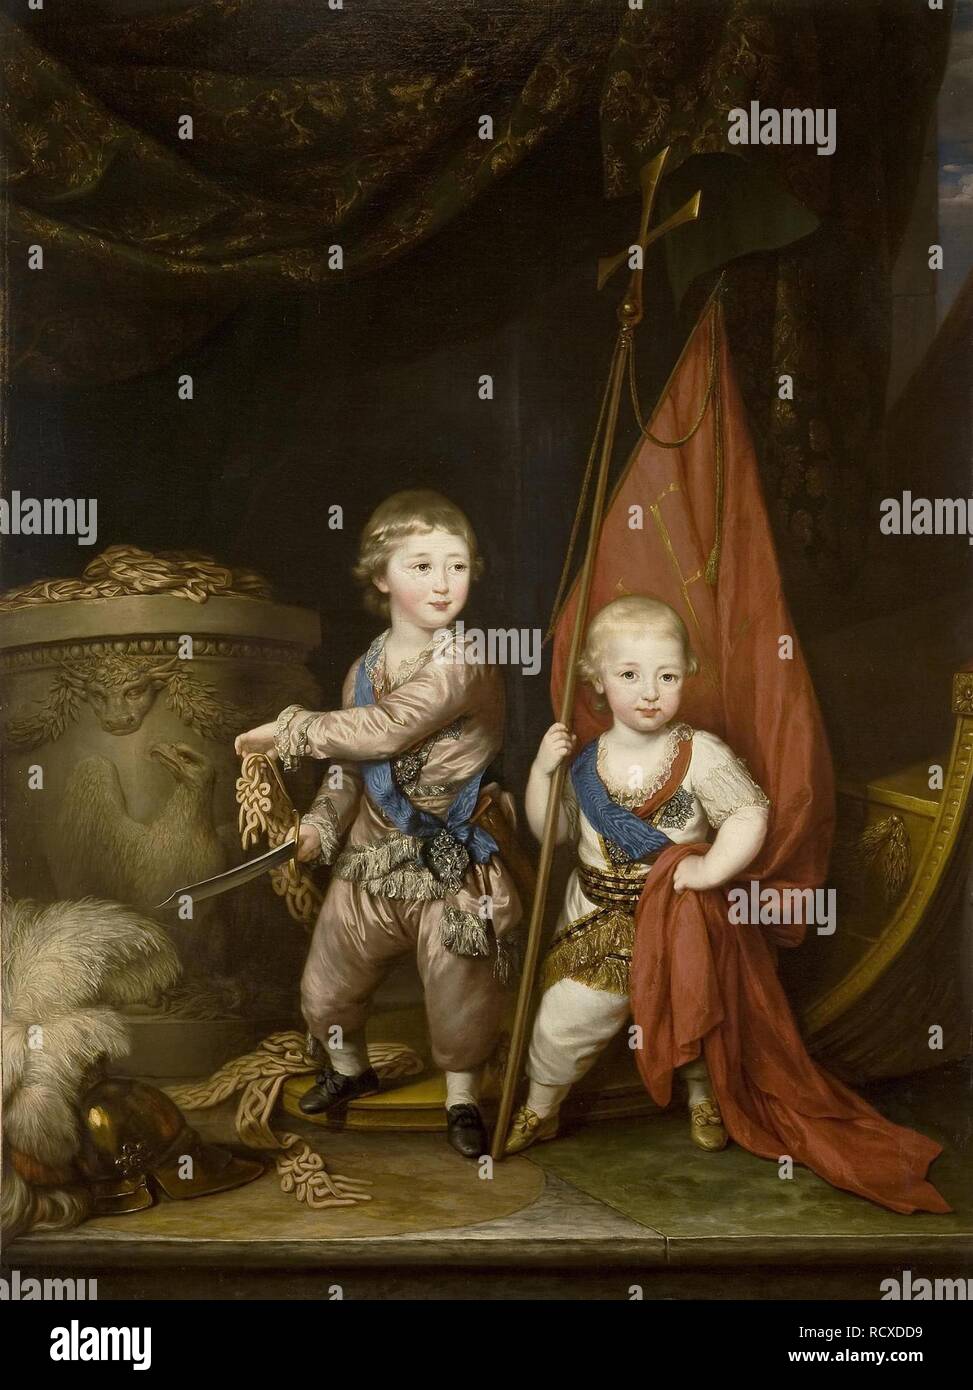 Portrait of Grand Dukes Alexander Pavlovich and Constantine Pavlovich as children. Museum: State Hermitage, St. Petersburg. Author: BROMPTON, RICHARD. Stock Photo